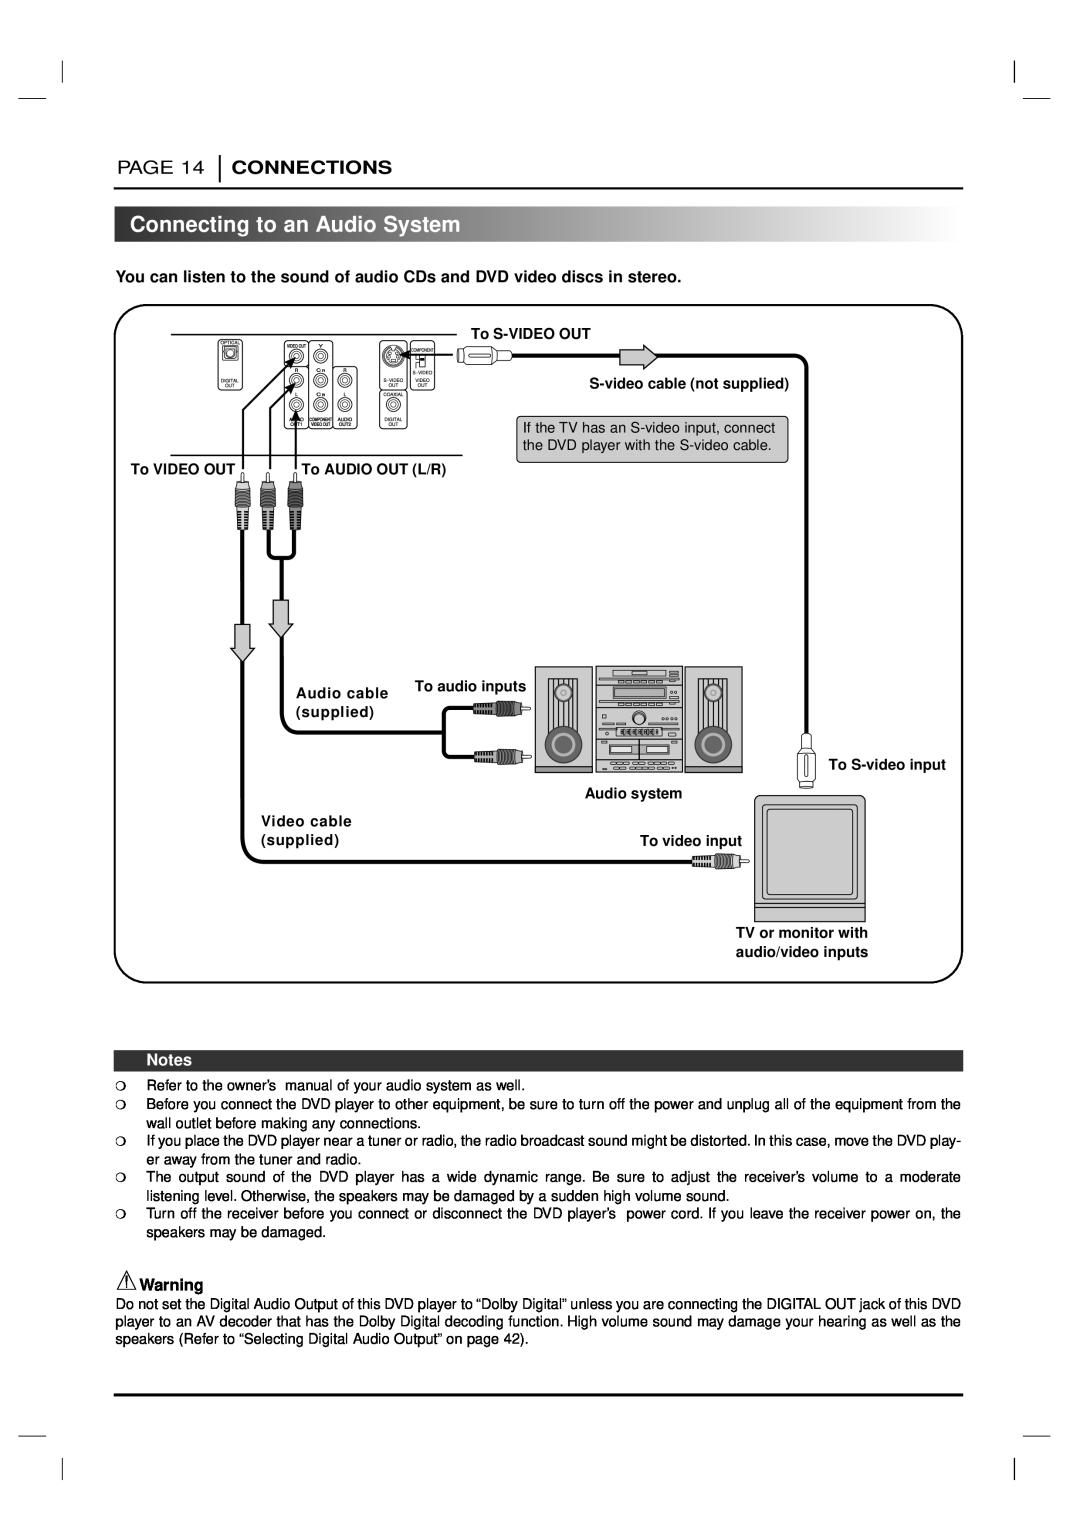 Marantz VC5200 manual ConnectingtoanAudioSystem, Page, Connections, To VIDEO OUT, To S-VIDEO OUT S-video cable not supplied 